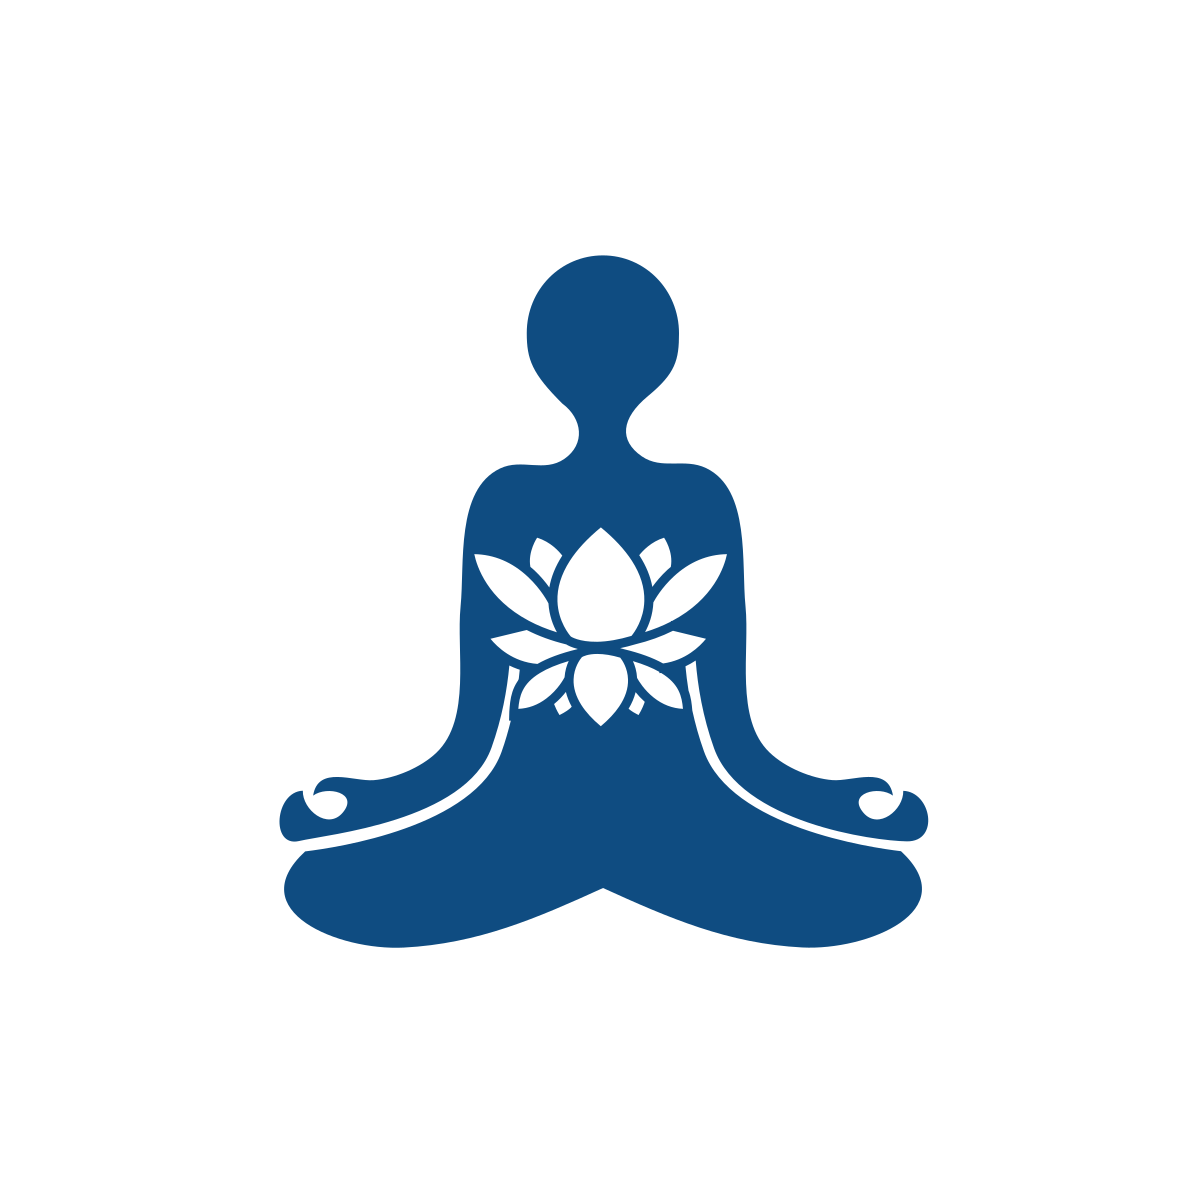 Picto yogi avec lotus sur la poitrine, page d'accueil